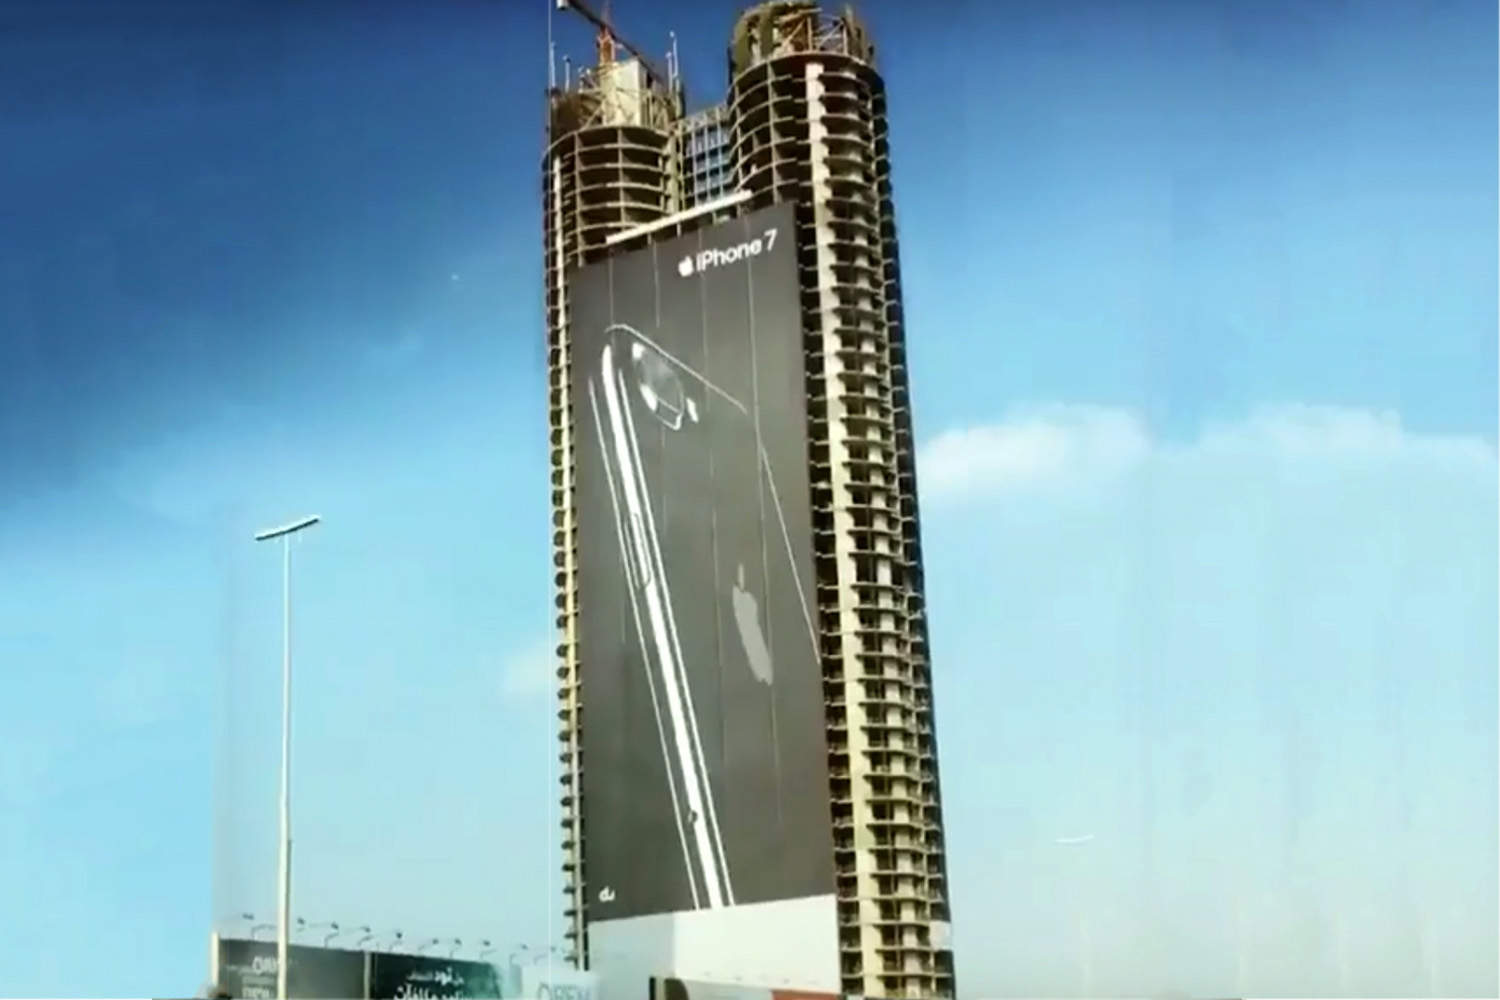 iPhone 7 Dubai